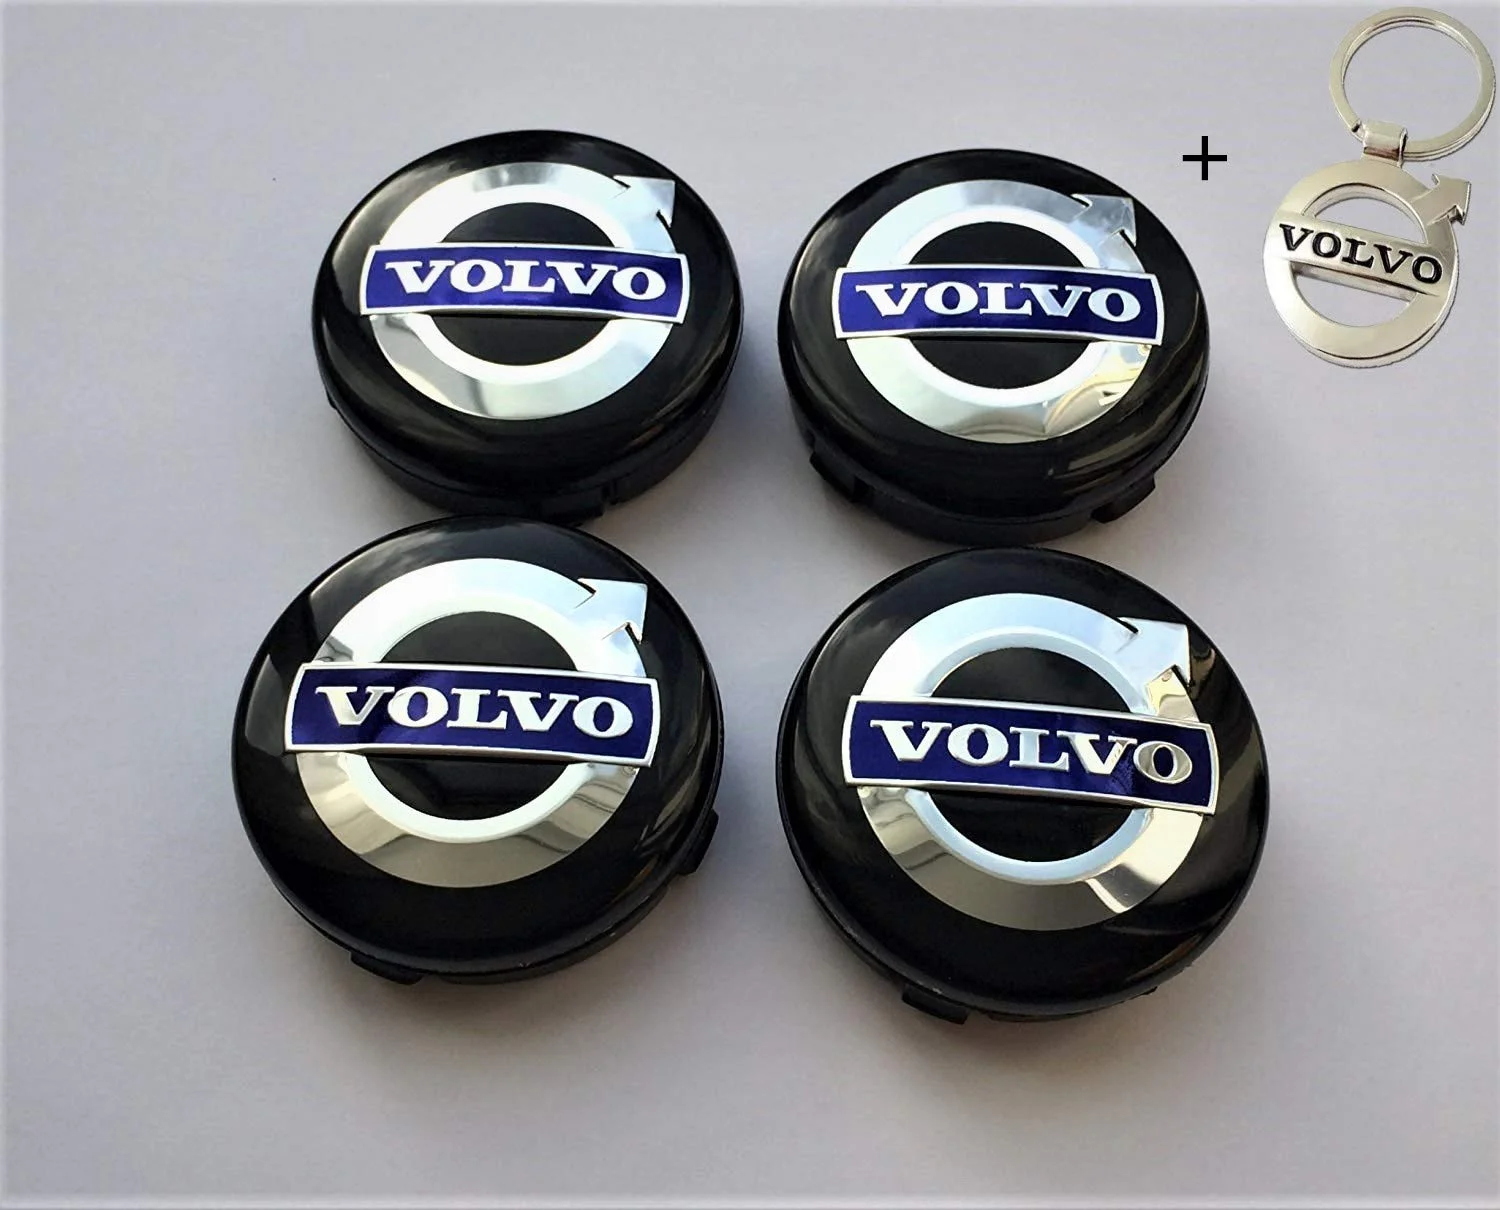 4 tapabujes gris con fondo negro para Volvo 64mm